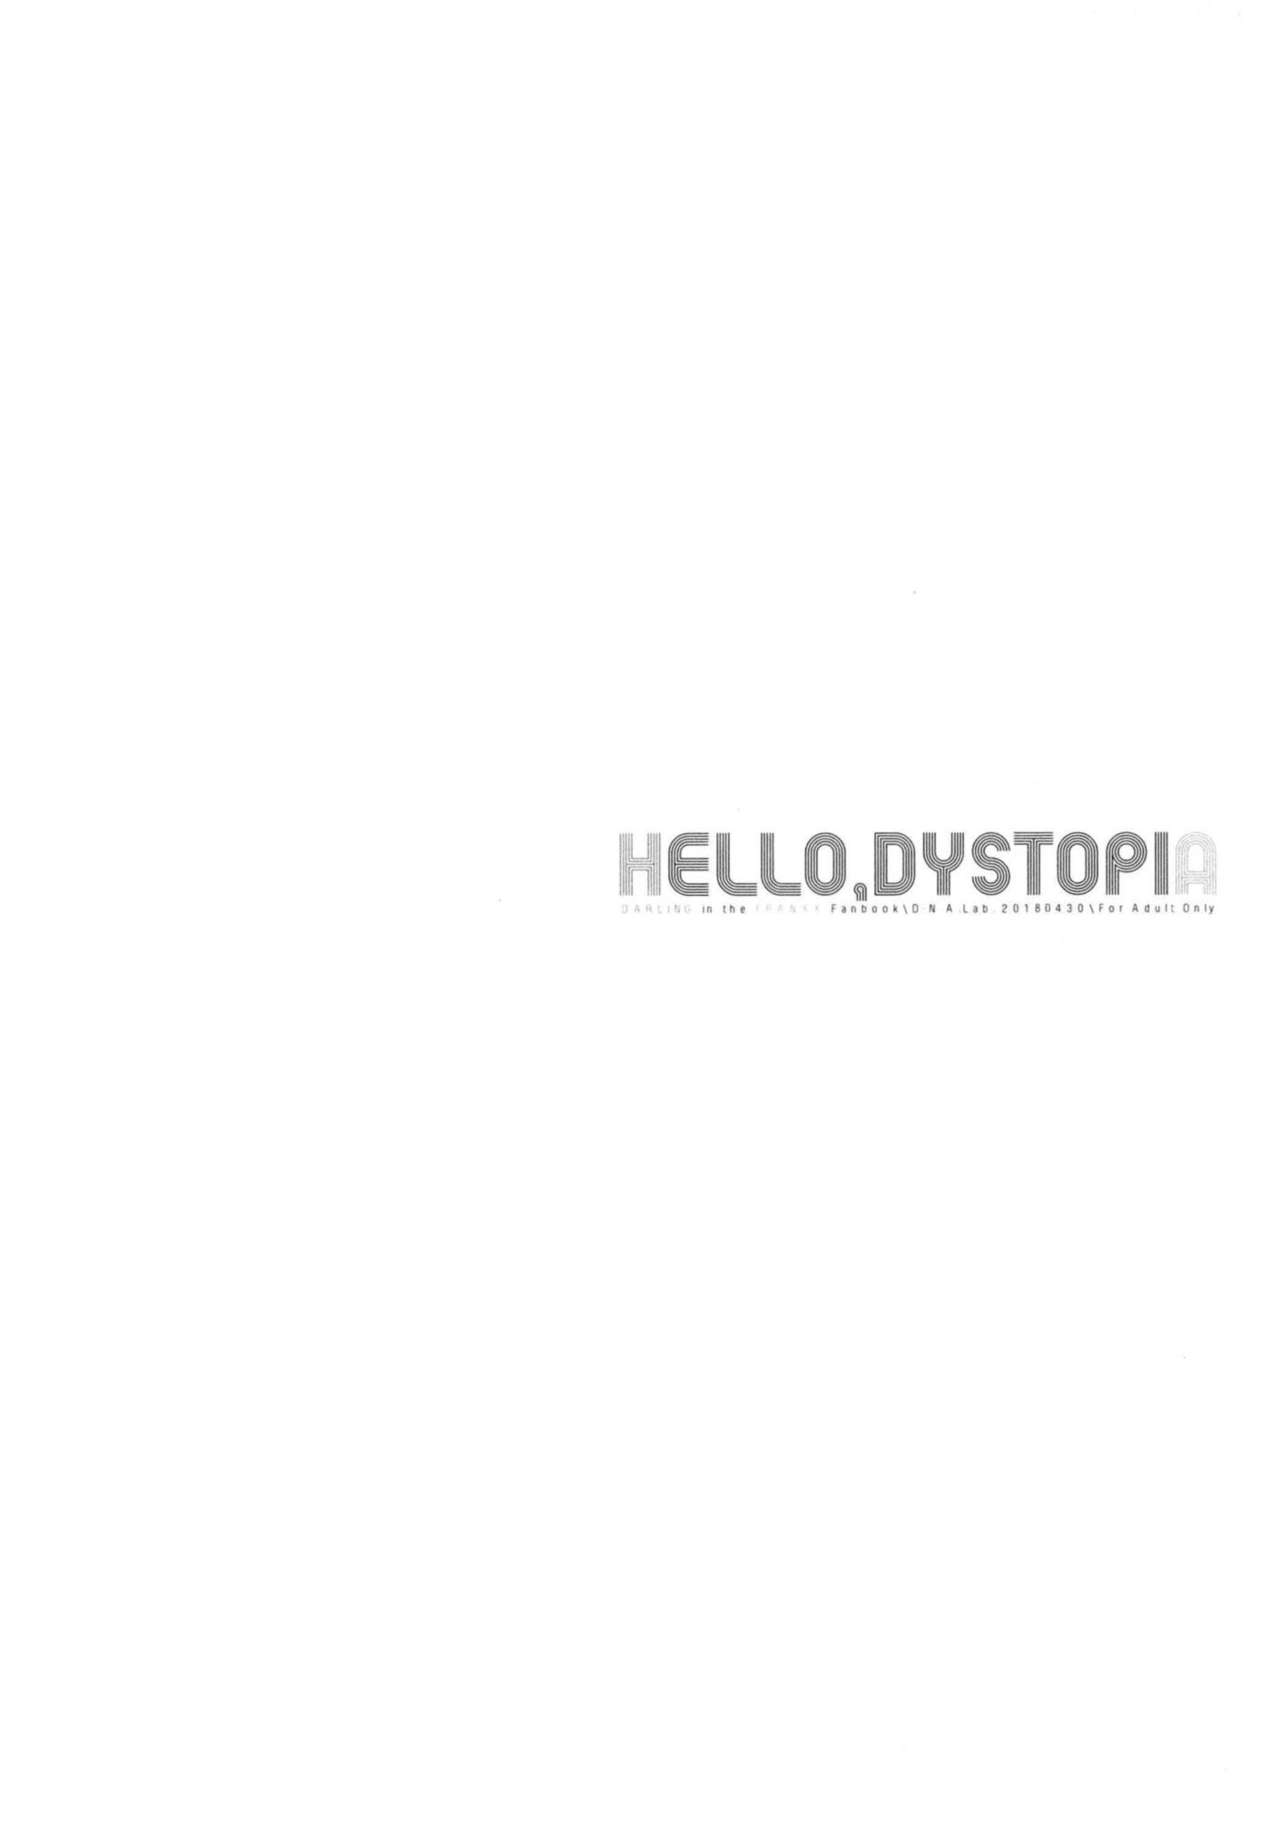 (COMIC1☆13) [D・N・A.Lab. (ミヤスリサ)] HELLO, DYSTOPIA (ダーリン・イン・ザ・フランキス)